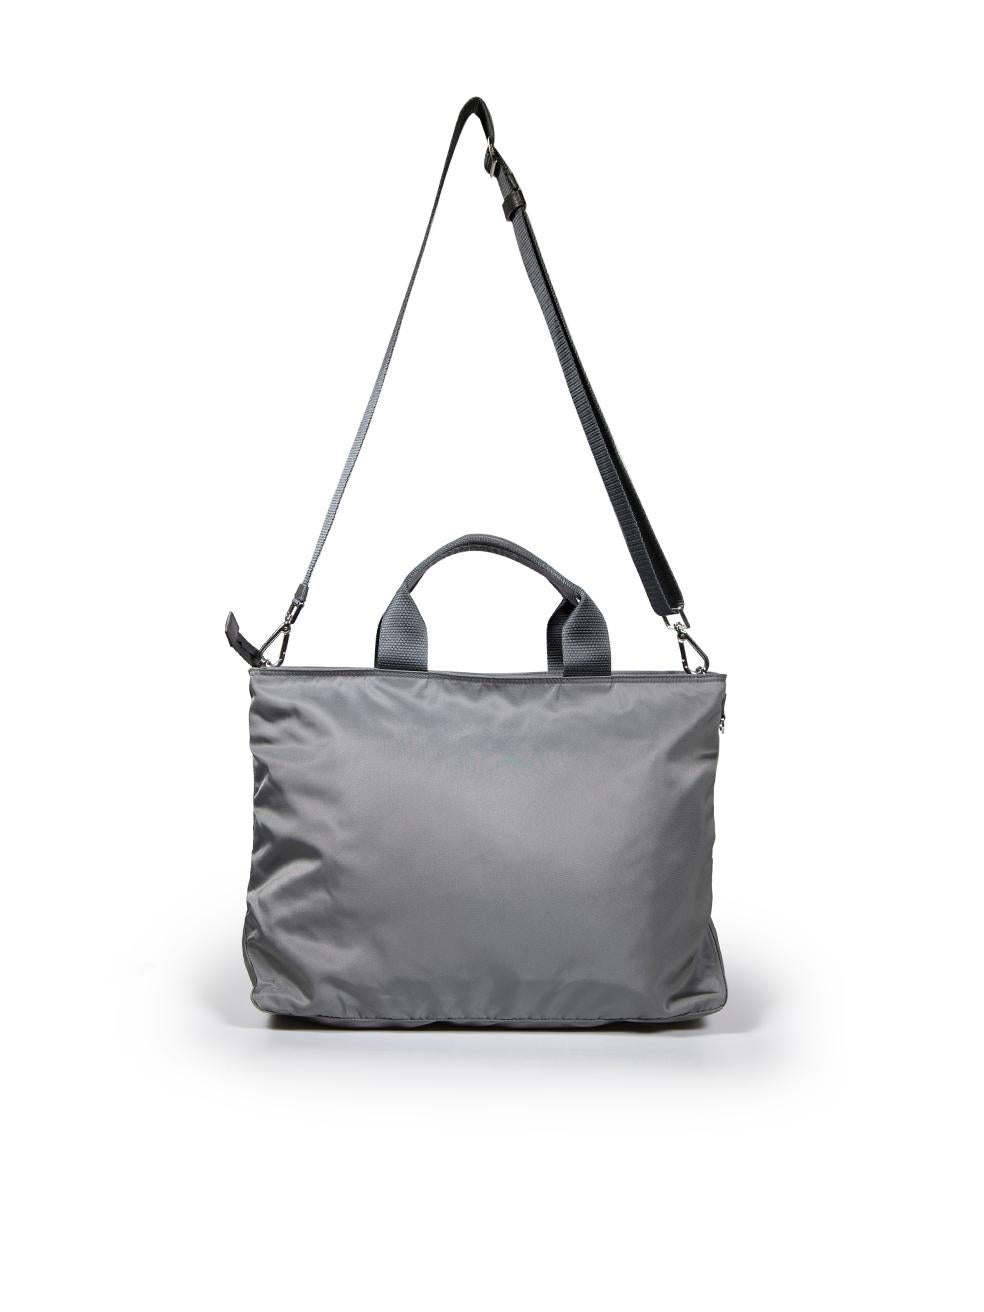 Prada Grey Nylon Handbag In Good Condition For Sale In London, GB